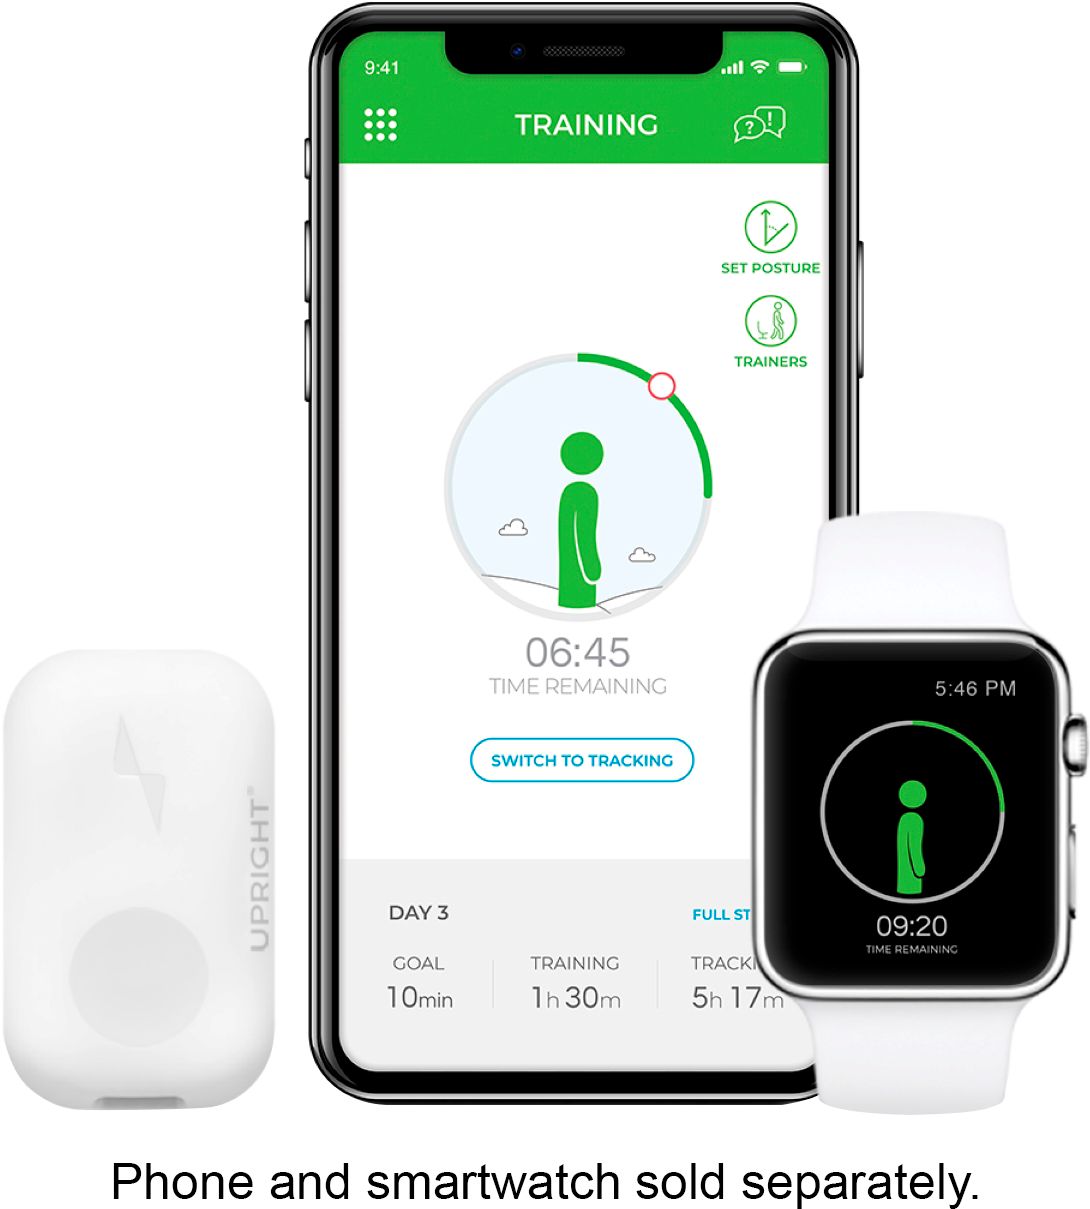 UpRight Go Trainer - Posture tracker - Bluetooth